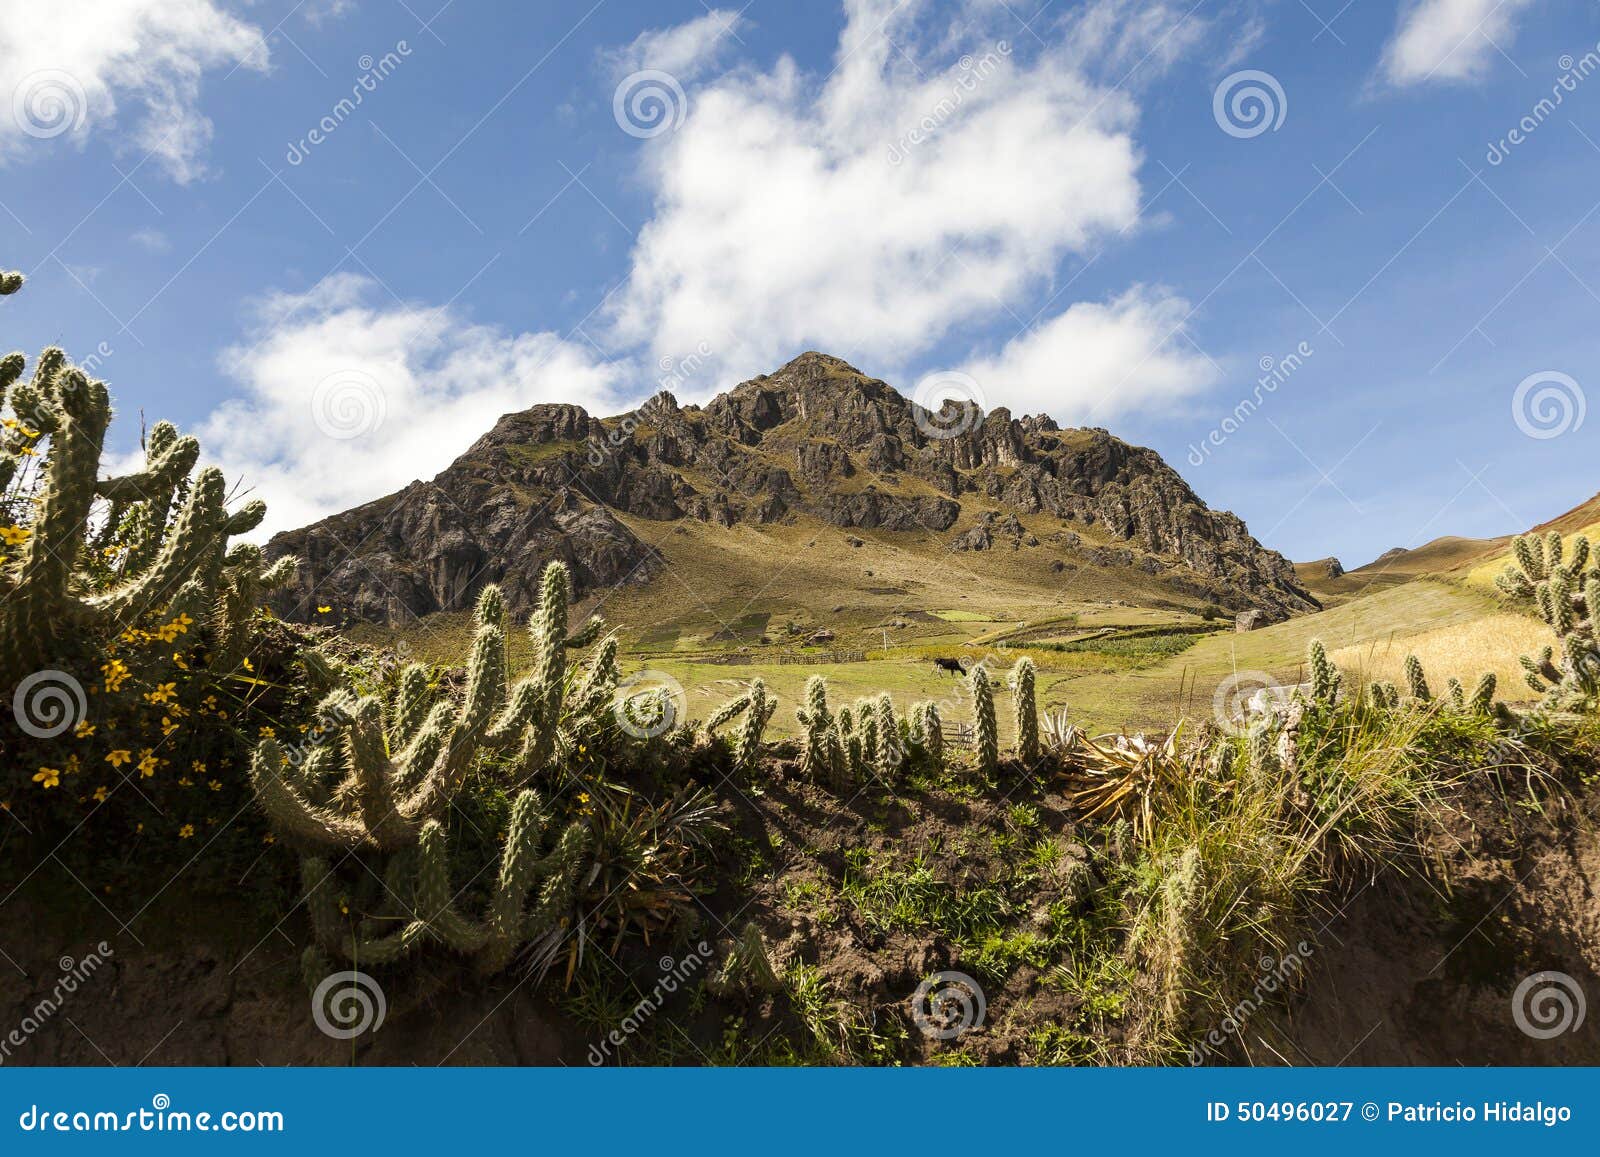 cactus and rocky peaks near zumbahua